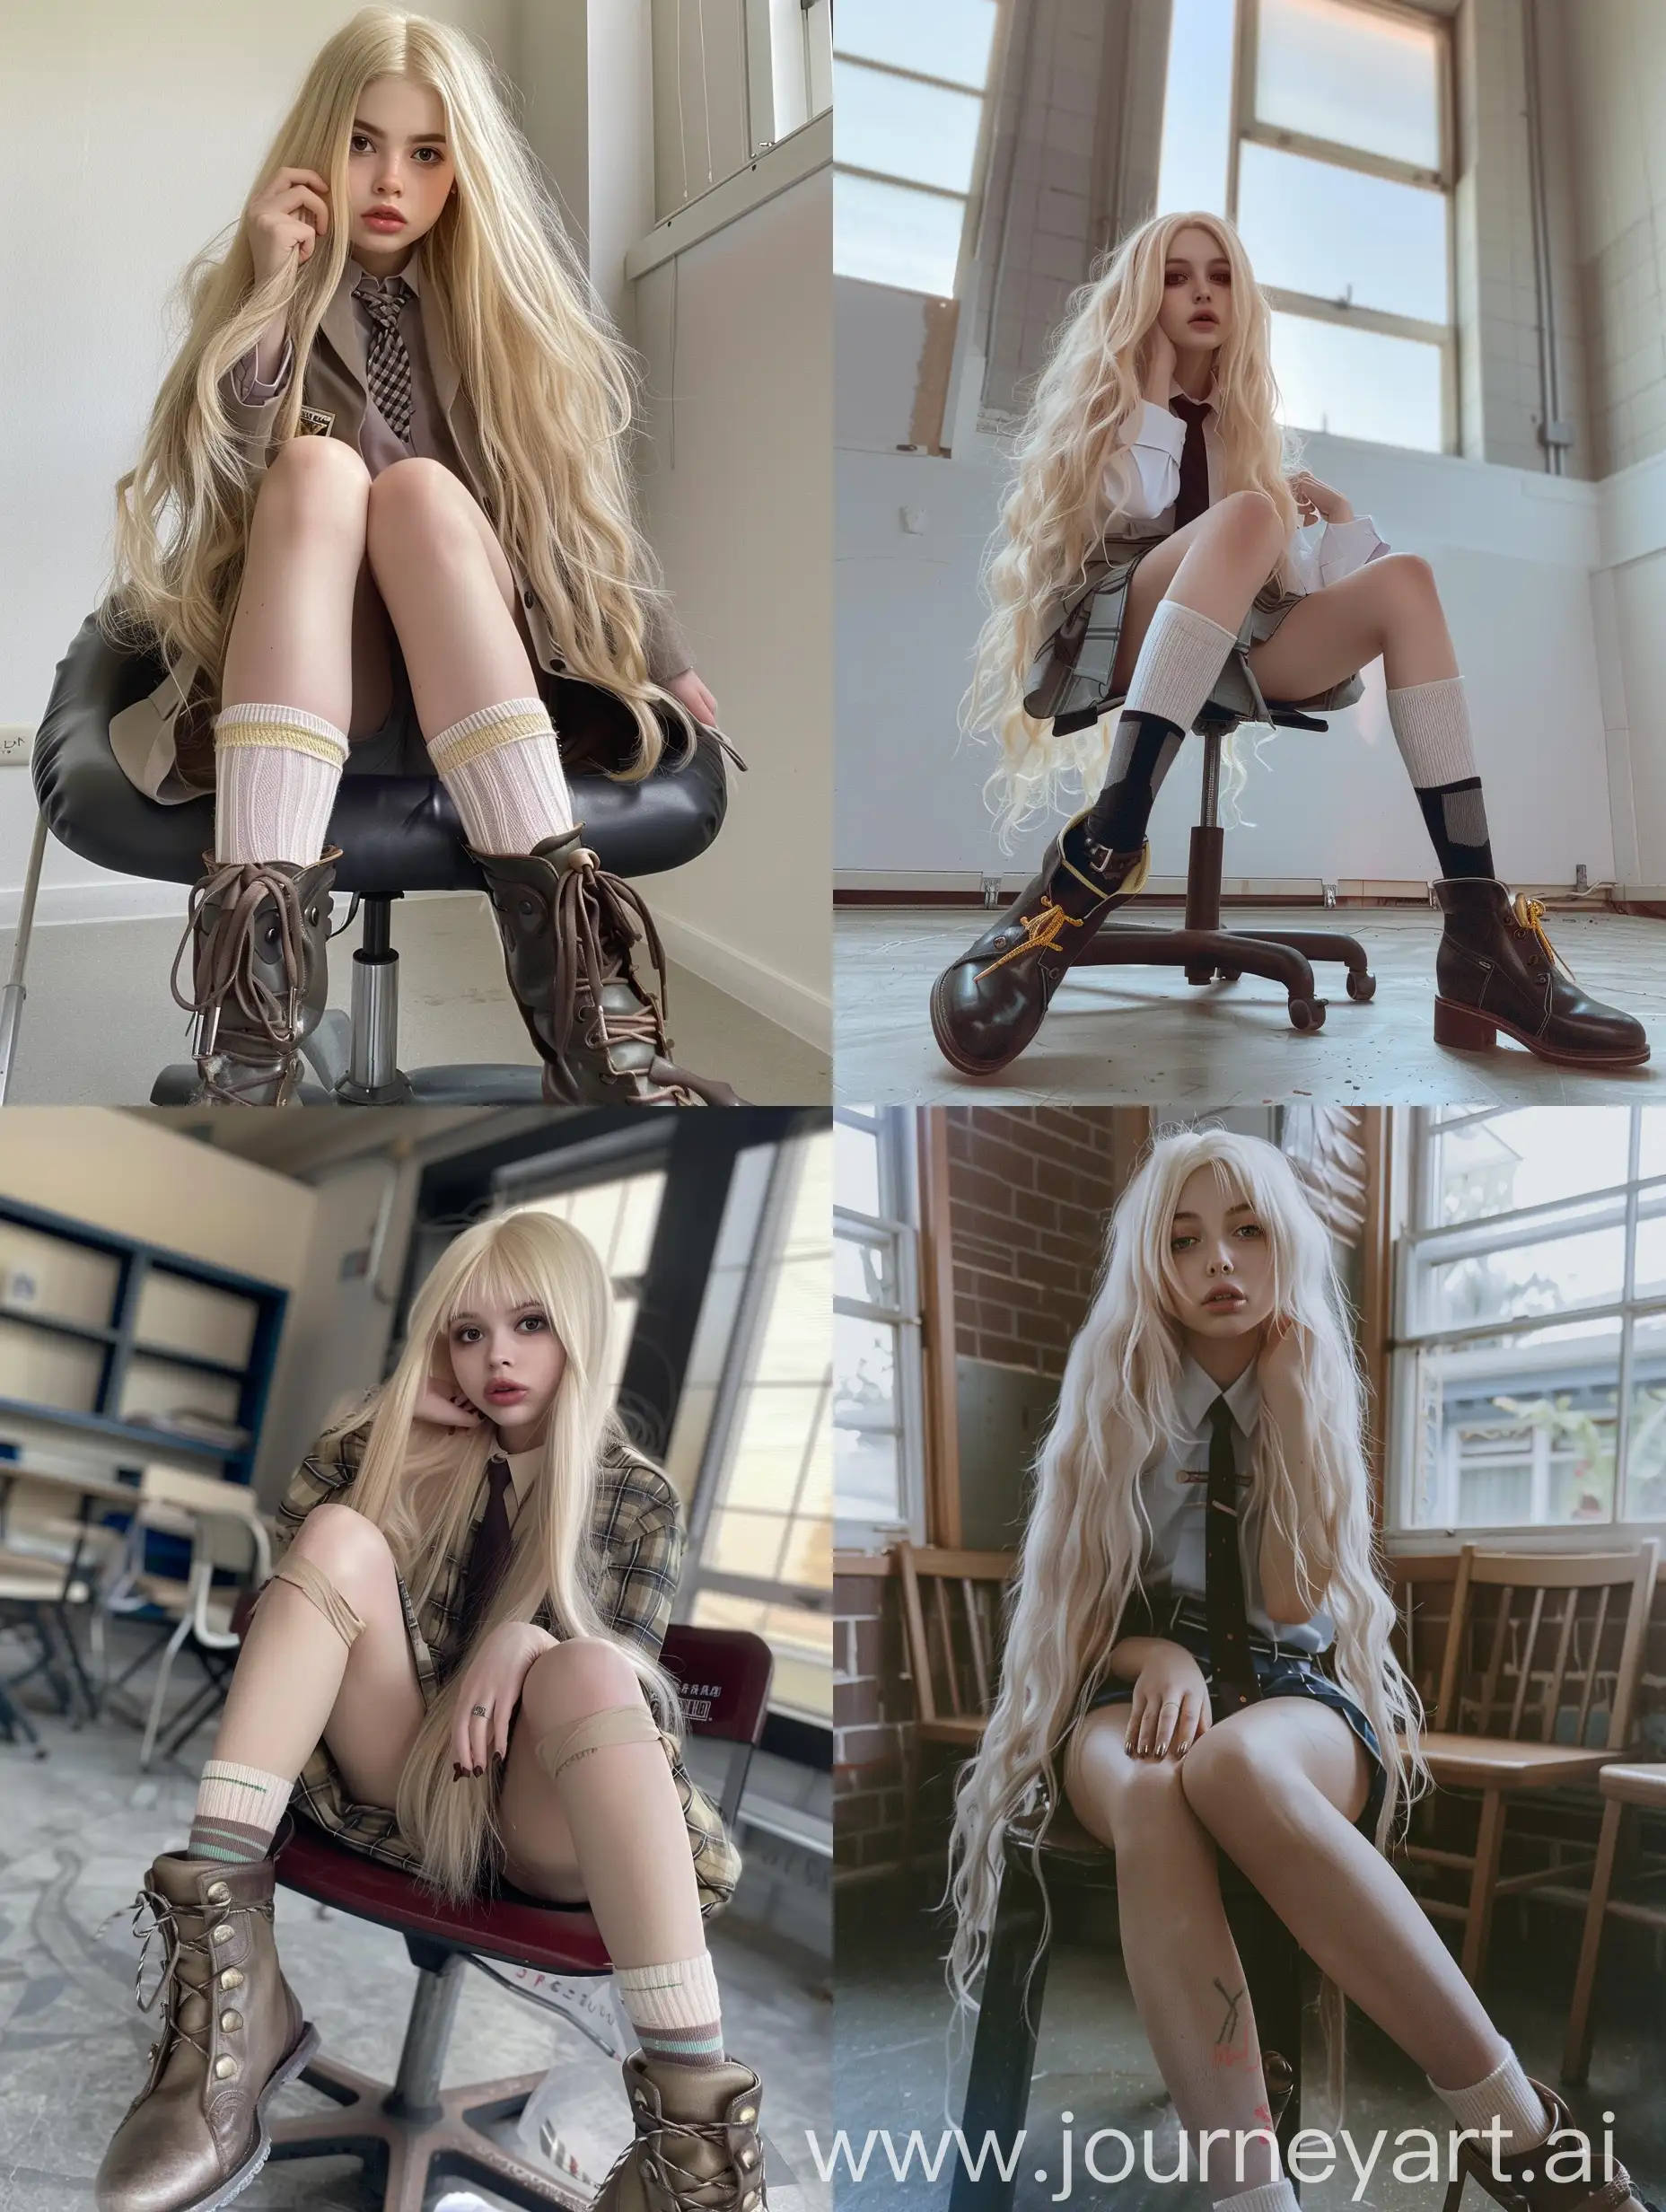 Blonde-Teen-Influencer-Taking-Natural-Selfie-in-School-Uniform